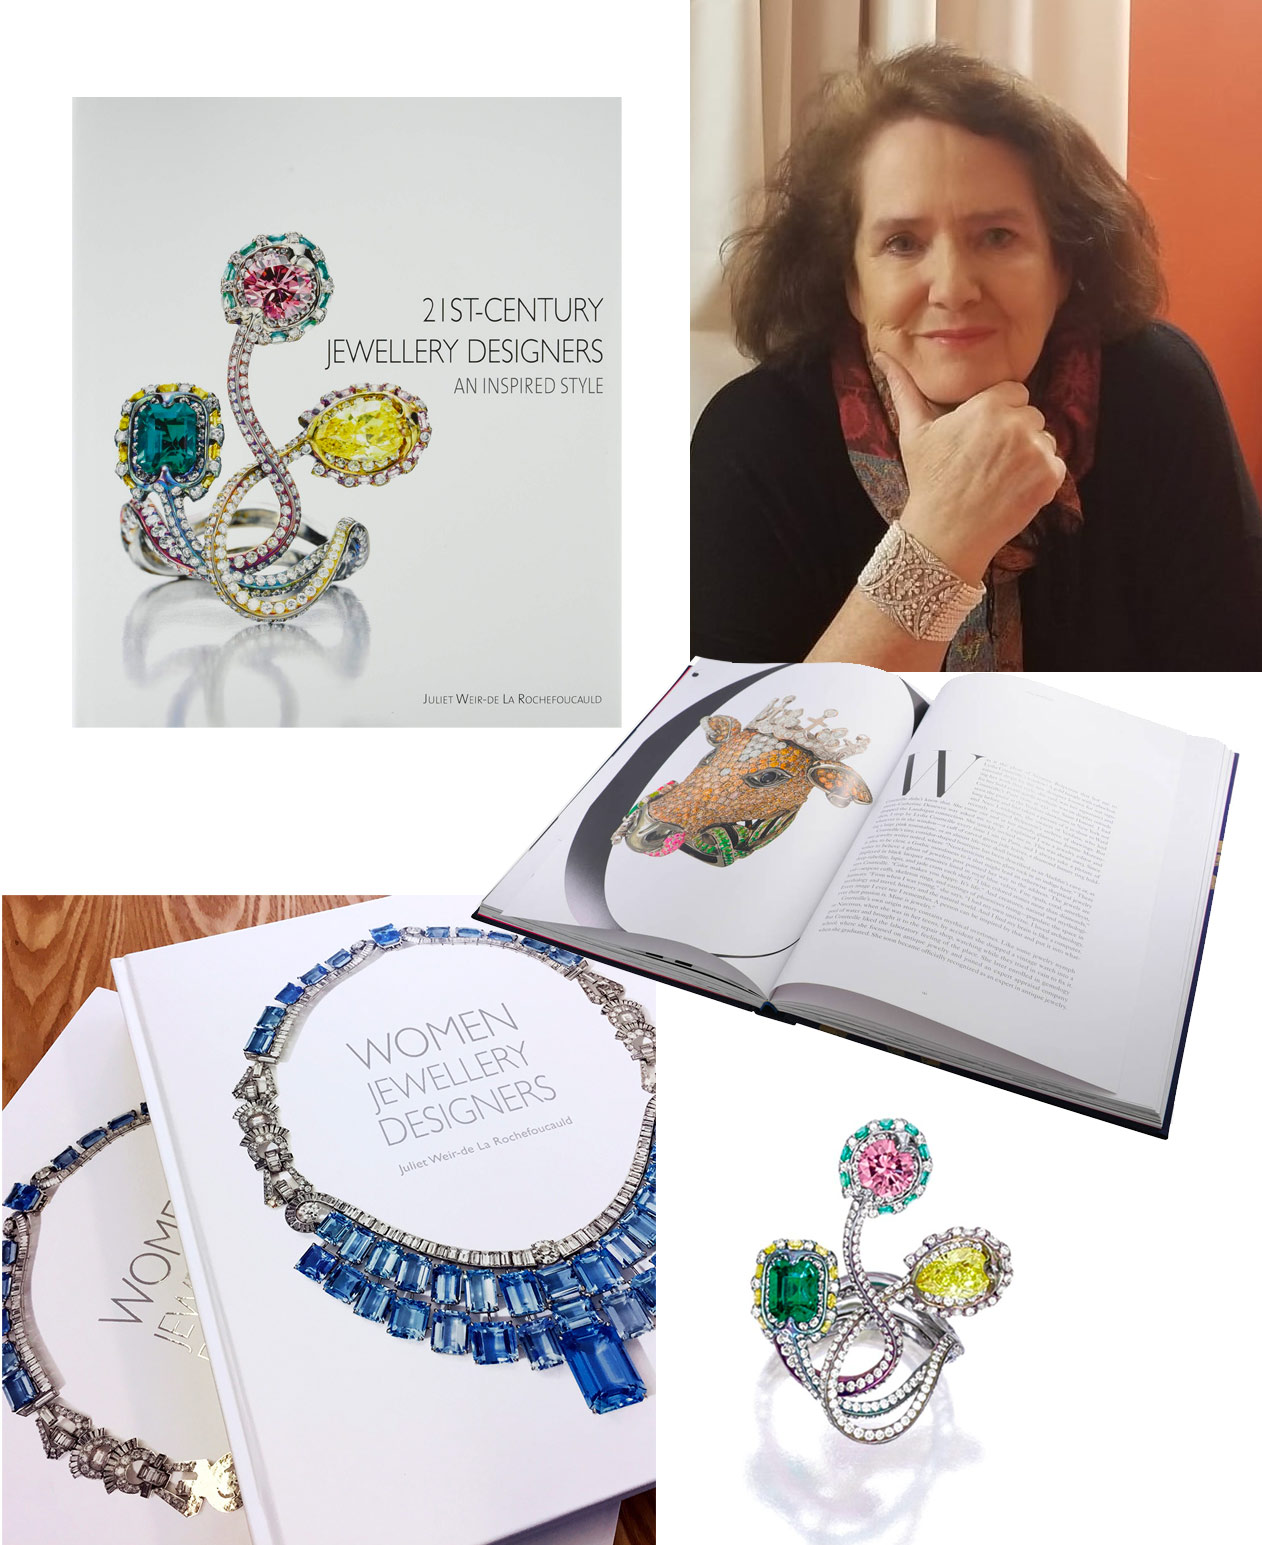 Juliet Weir-de La Rochefoucauld has written notable books including 21st Century Jewellery Designers - An Inspired Style